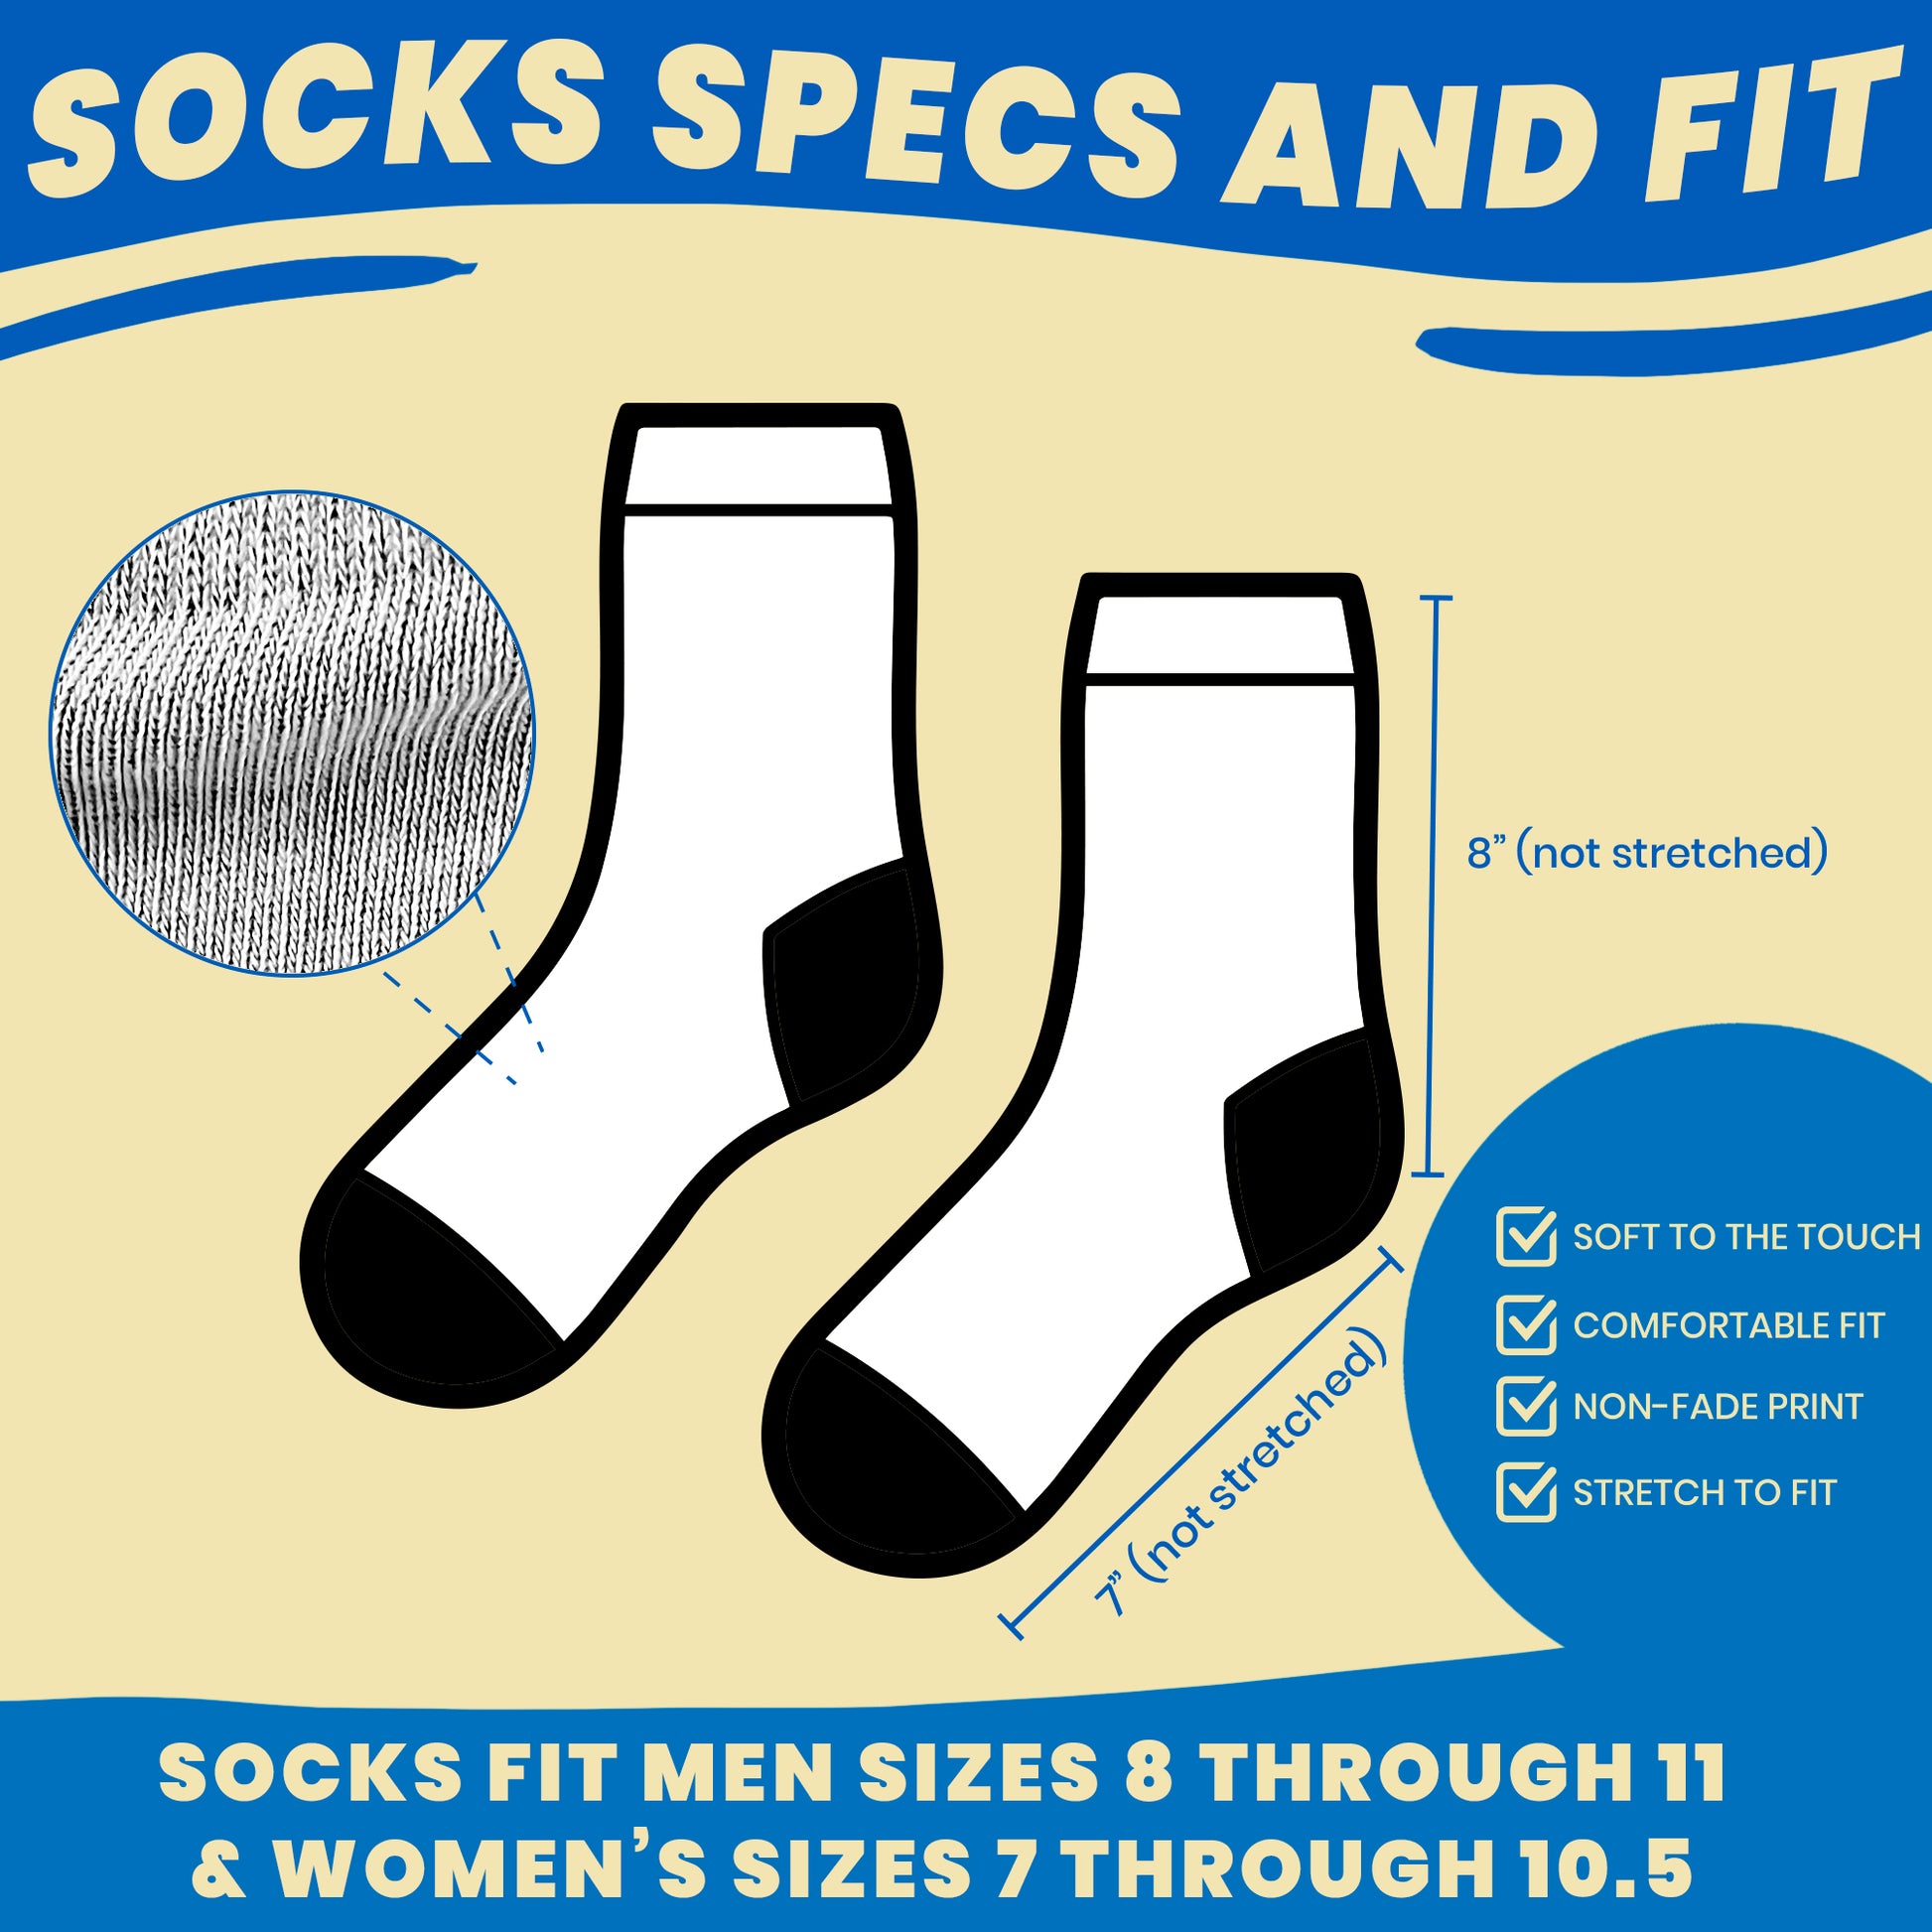 specs of socks 